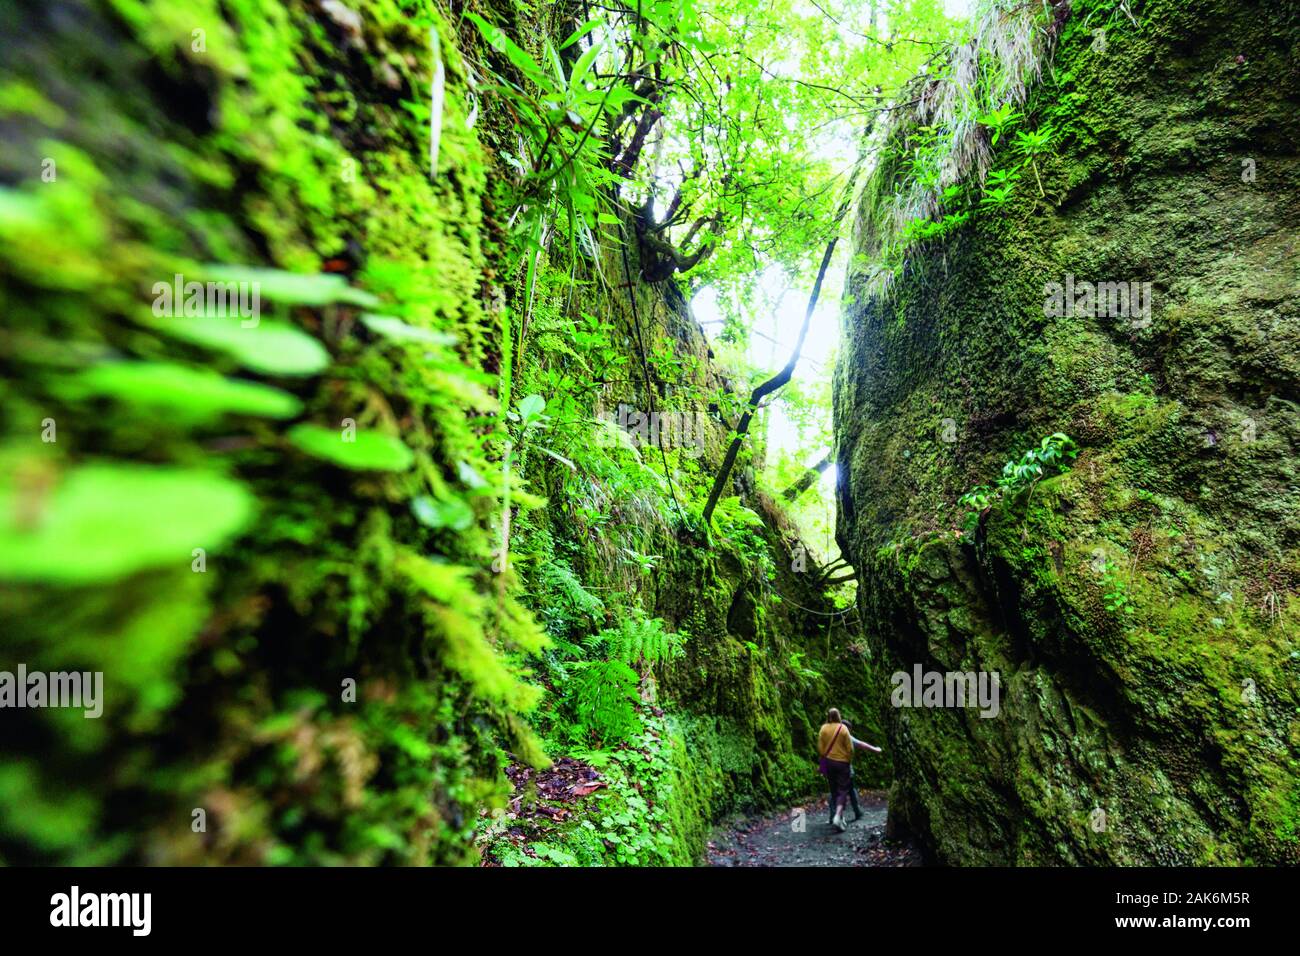 Ribeiro Frio: Parque Florestal Do Ribeiro Frio (Lorbeerwald), Madeira | Verwendung weltweit Stockfoto